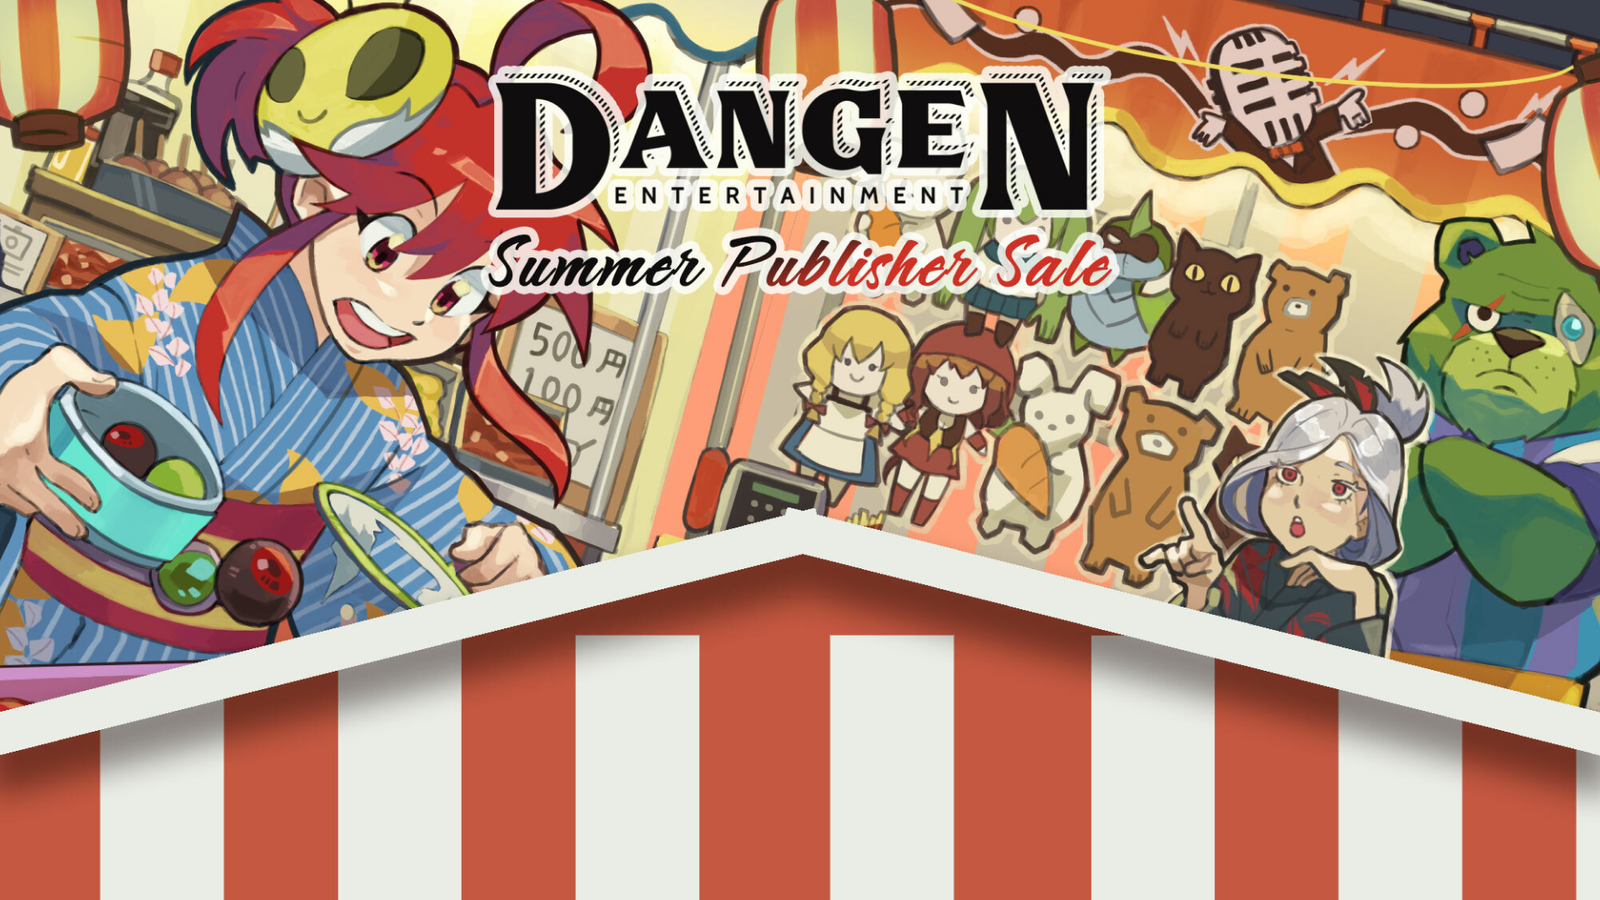 DANGEN Entertainment Publisher Sale 2023 on Steam